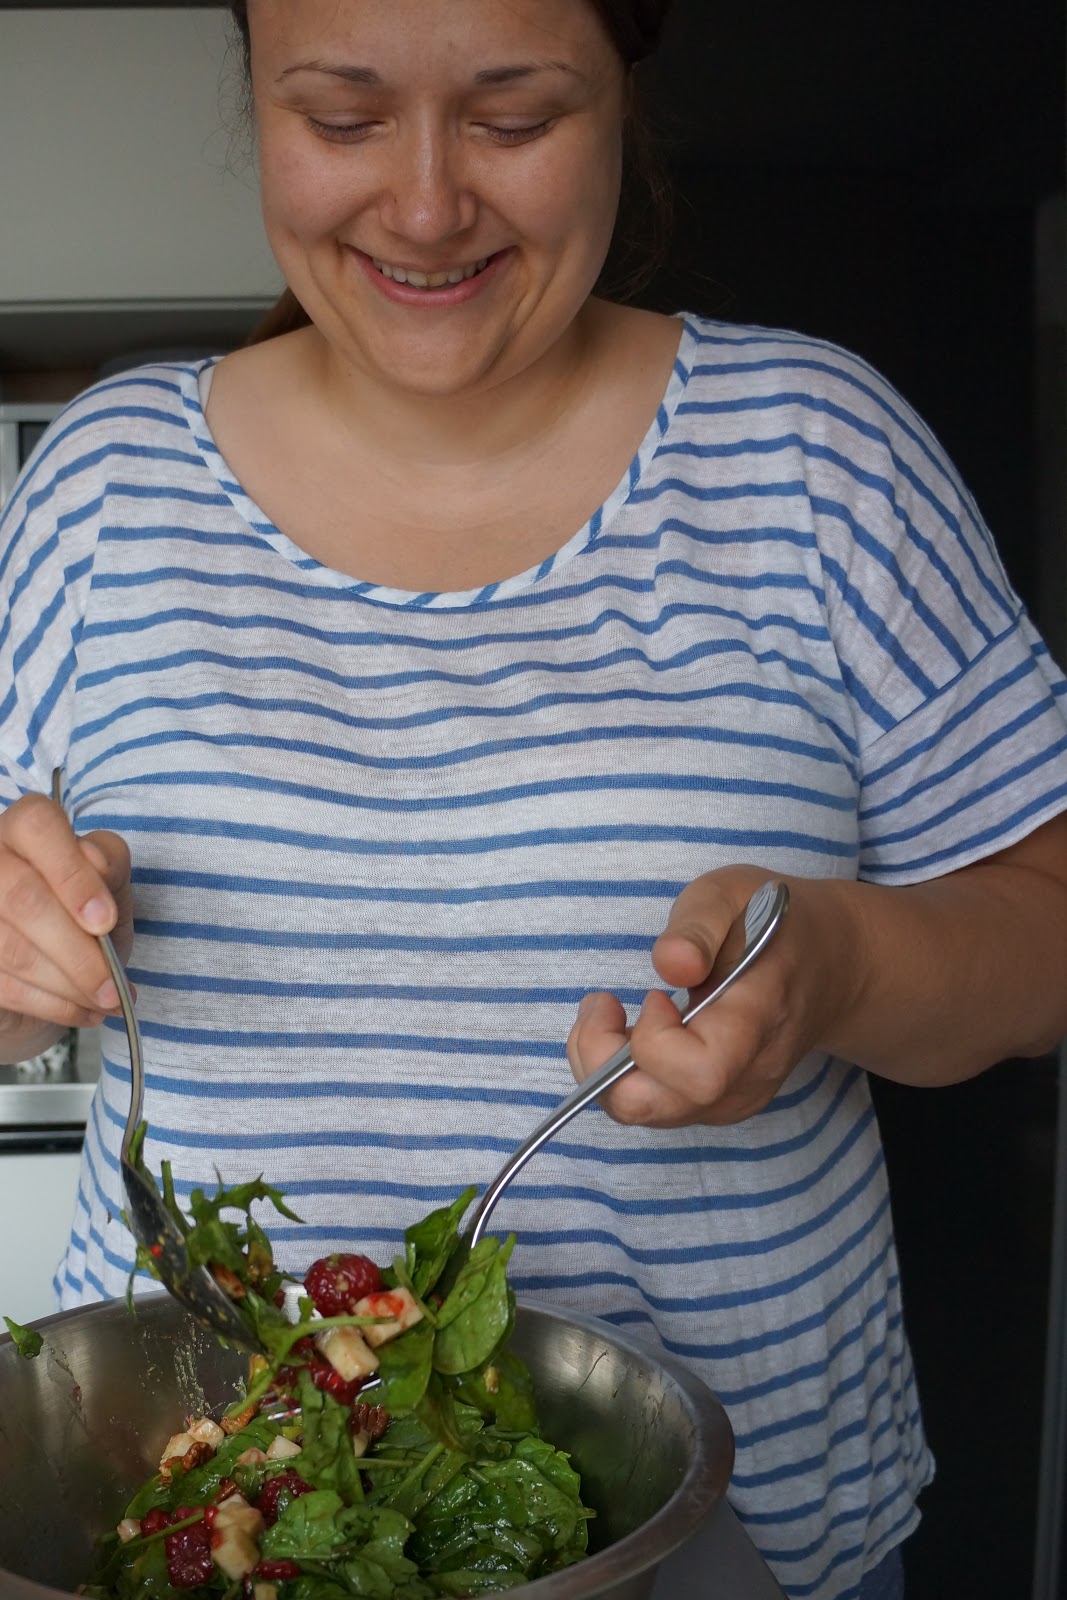 woman making a salad